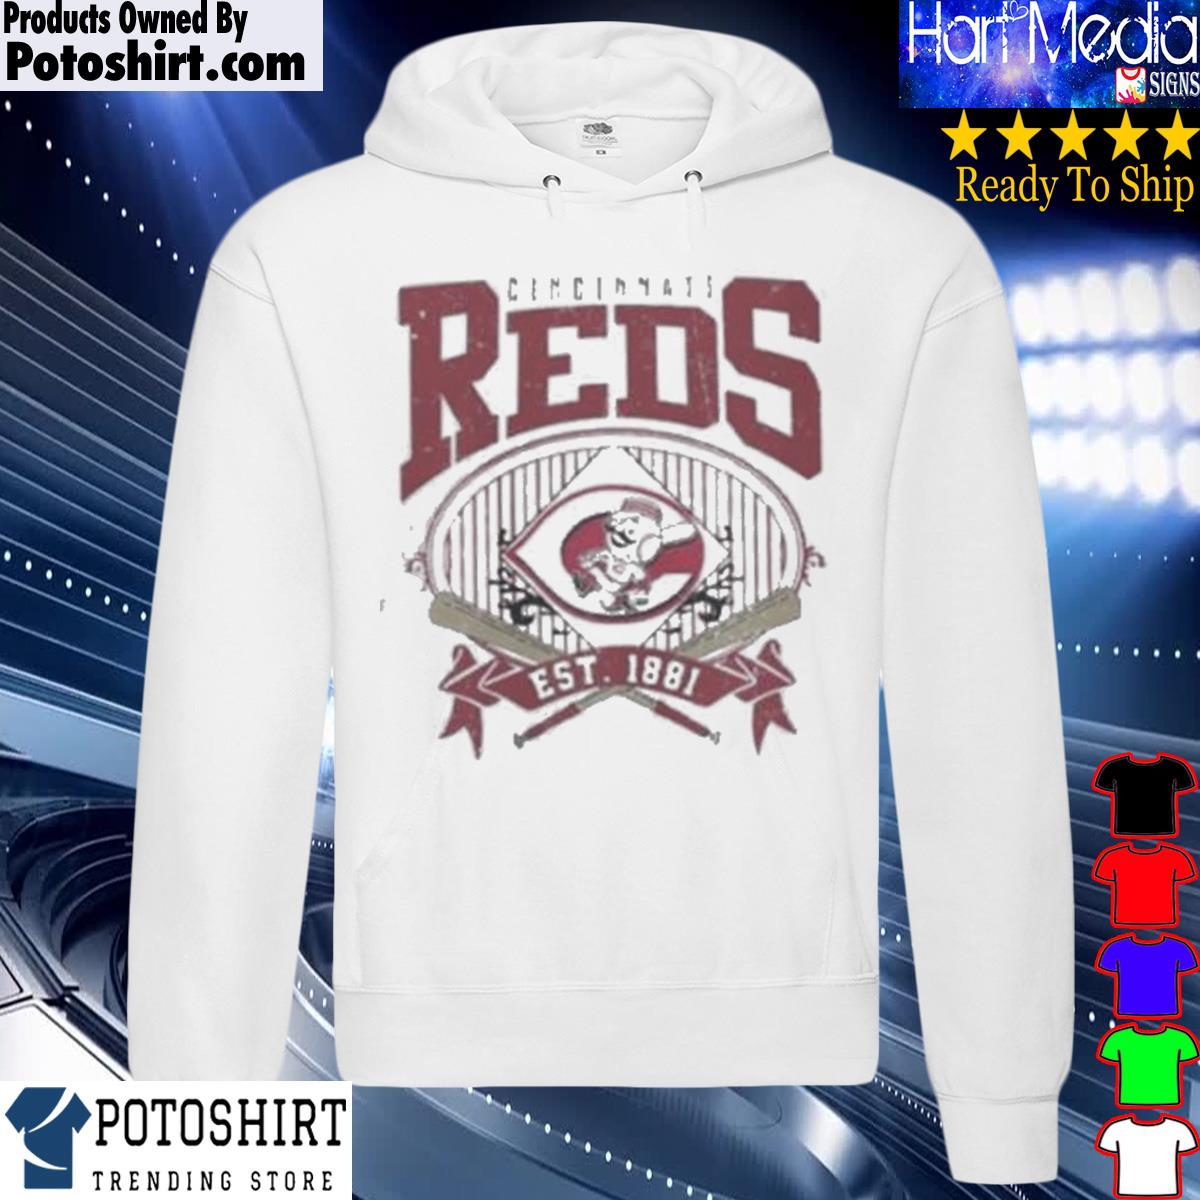 CincinnatI reds est 1881 vintage baseball fan shirt, hoodie, longsleeve,  sweater